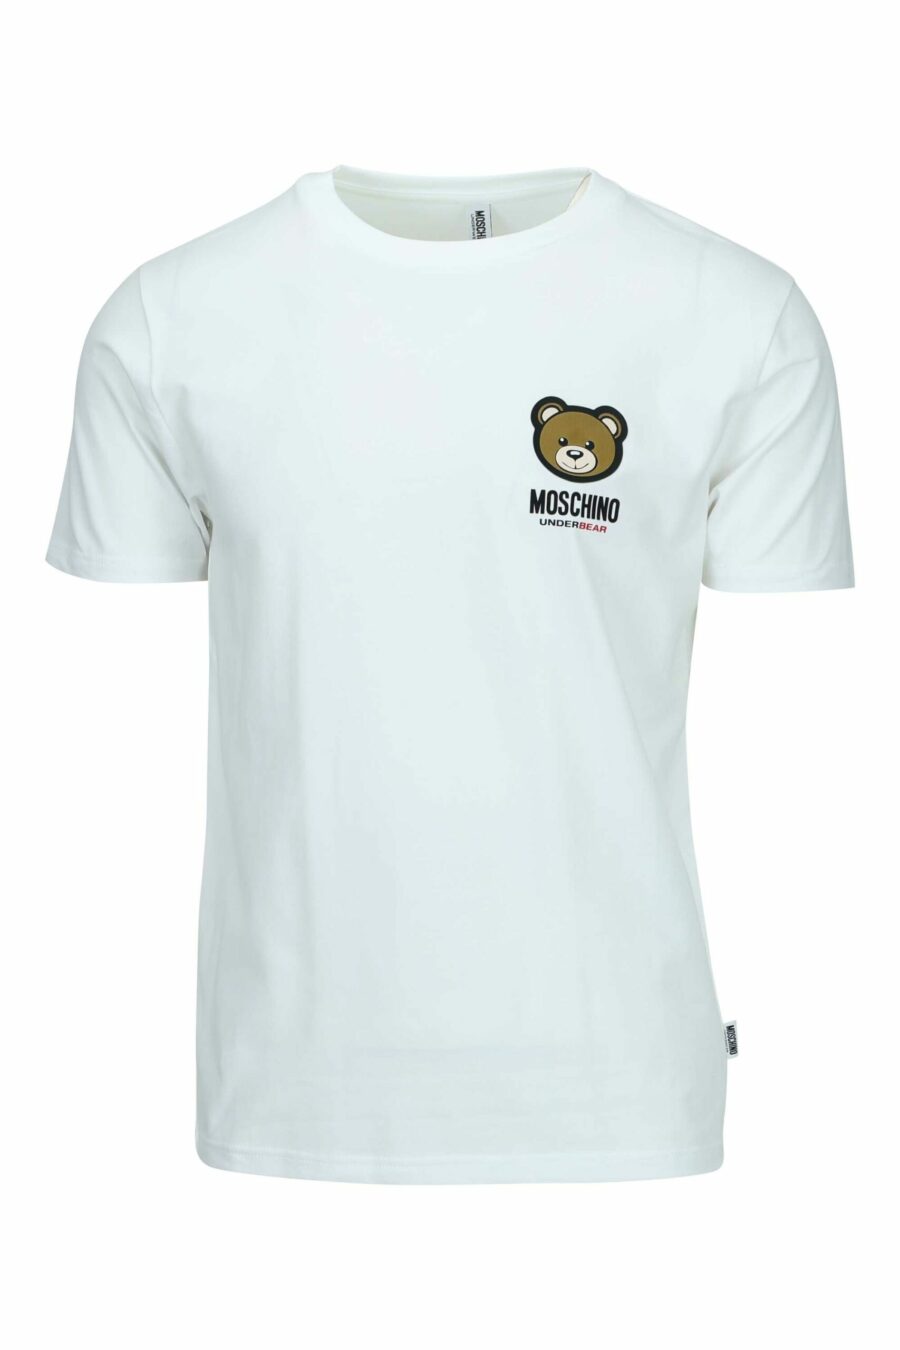 T-shirt branca com mini logótipo de urso "underbear" - 667113605678 scaled